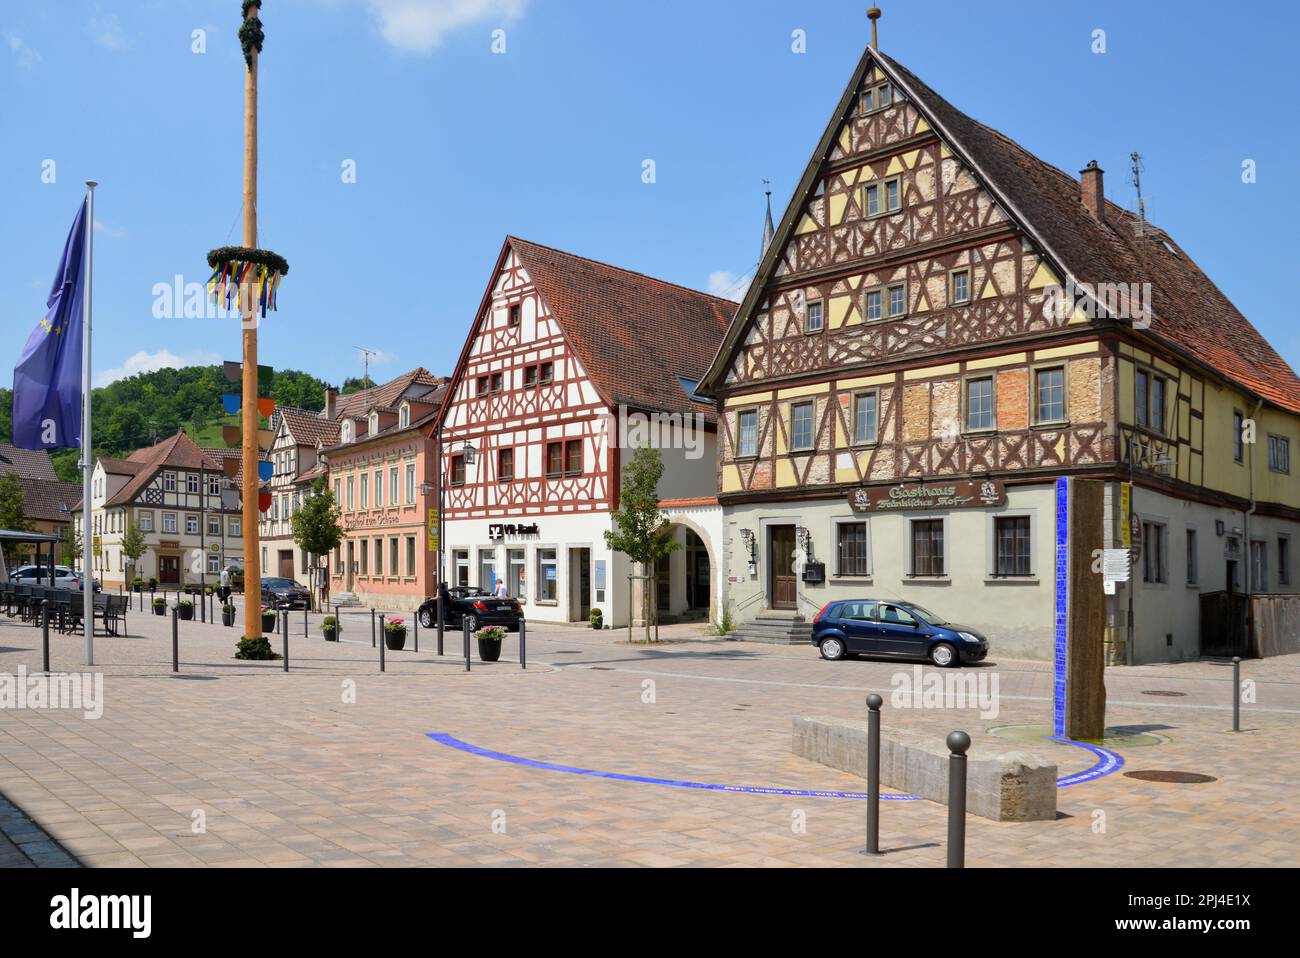 Germany, Bavaria, Unterfranken, Röttingen:  marketplace with maypole and timber-frame houses Stock Photo